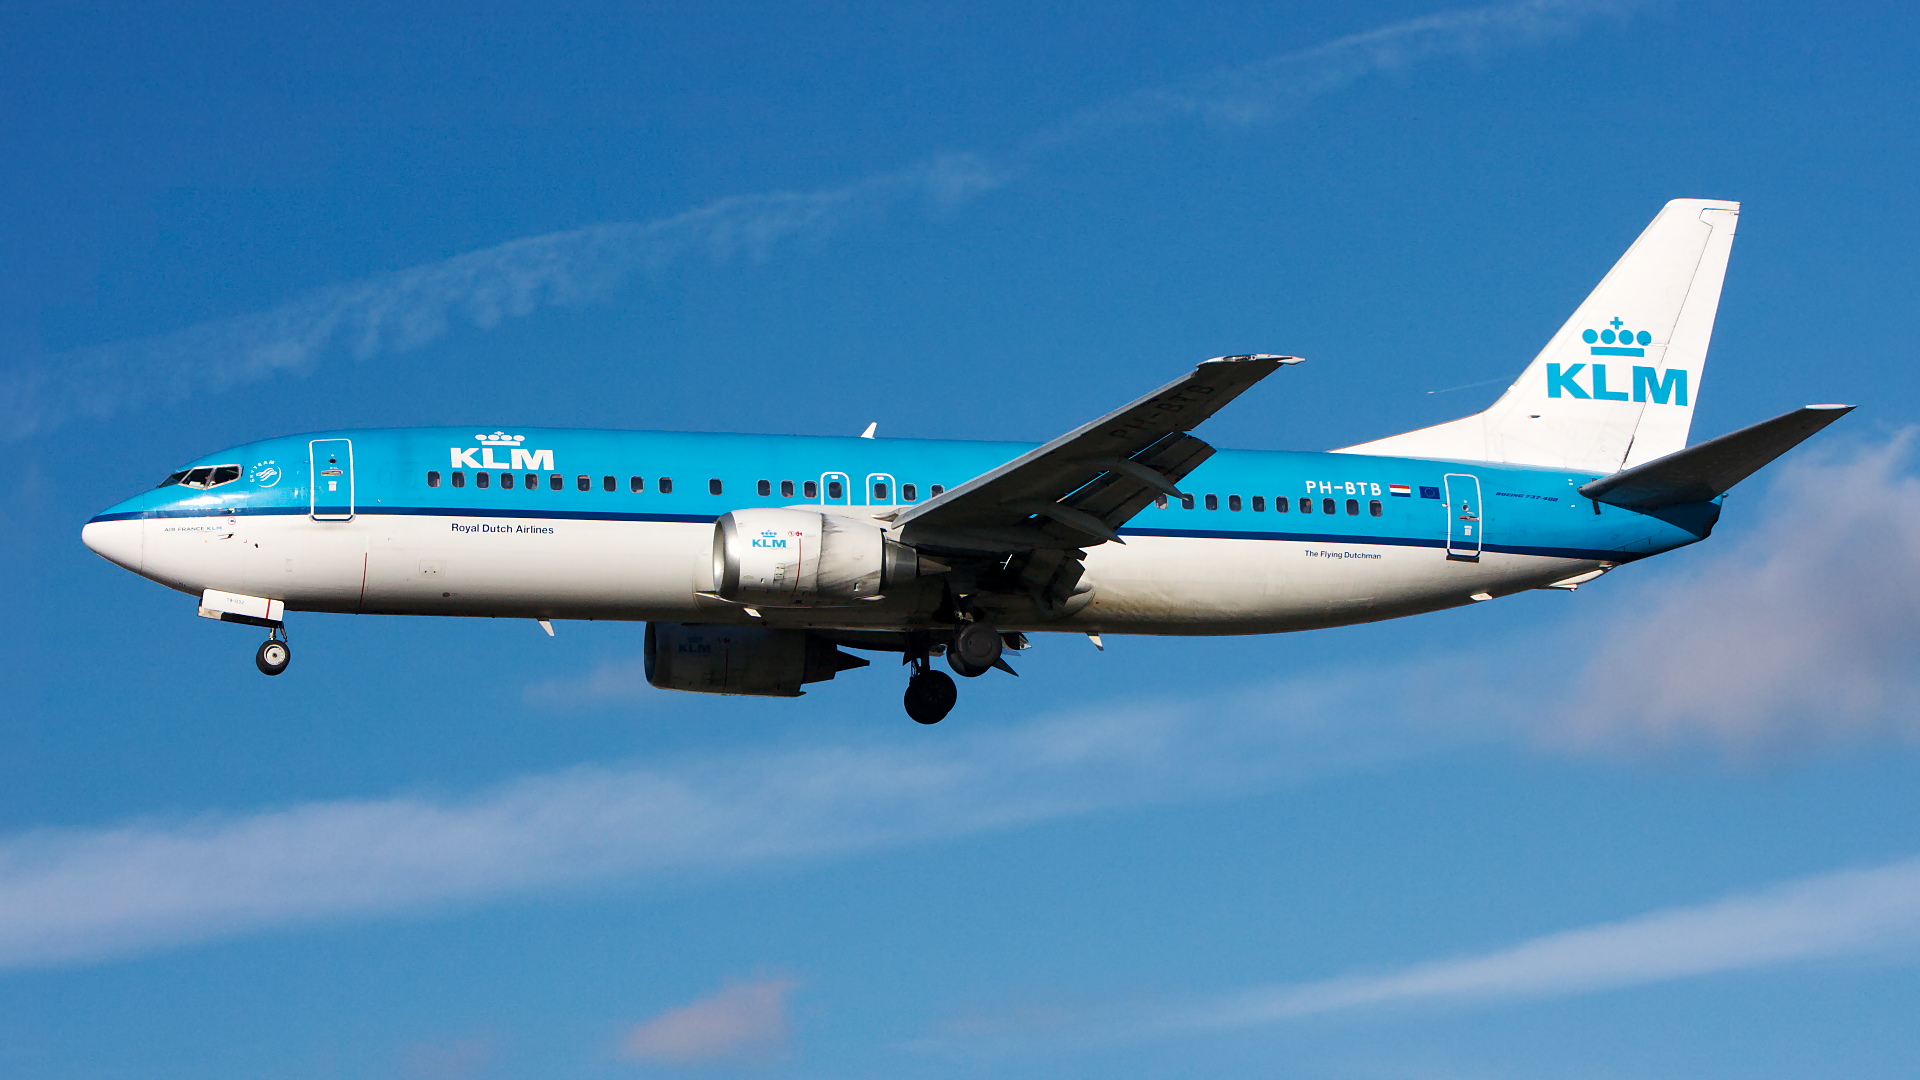 PH-BTB ✈ KLM Boeing 737-406 @ London-Heathrow